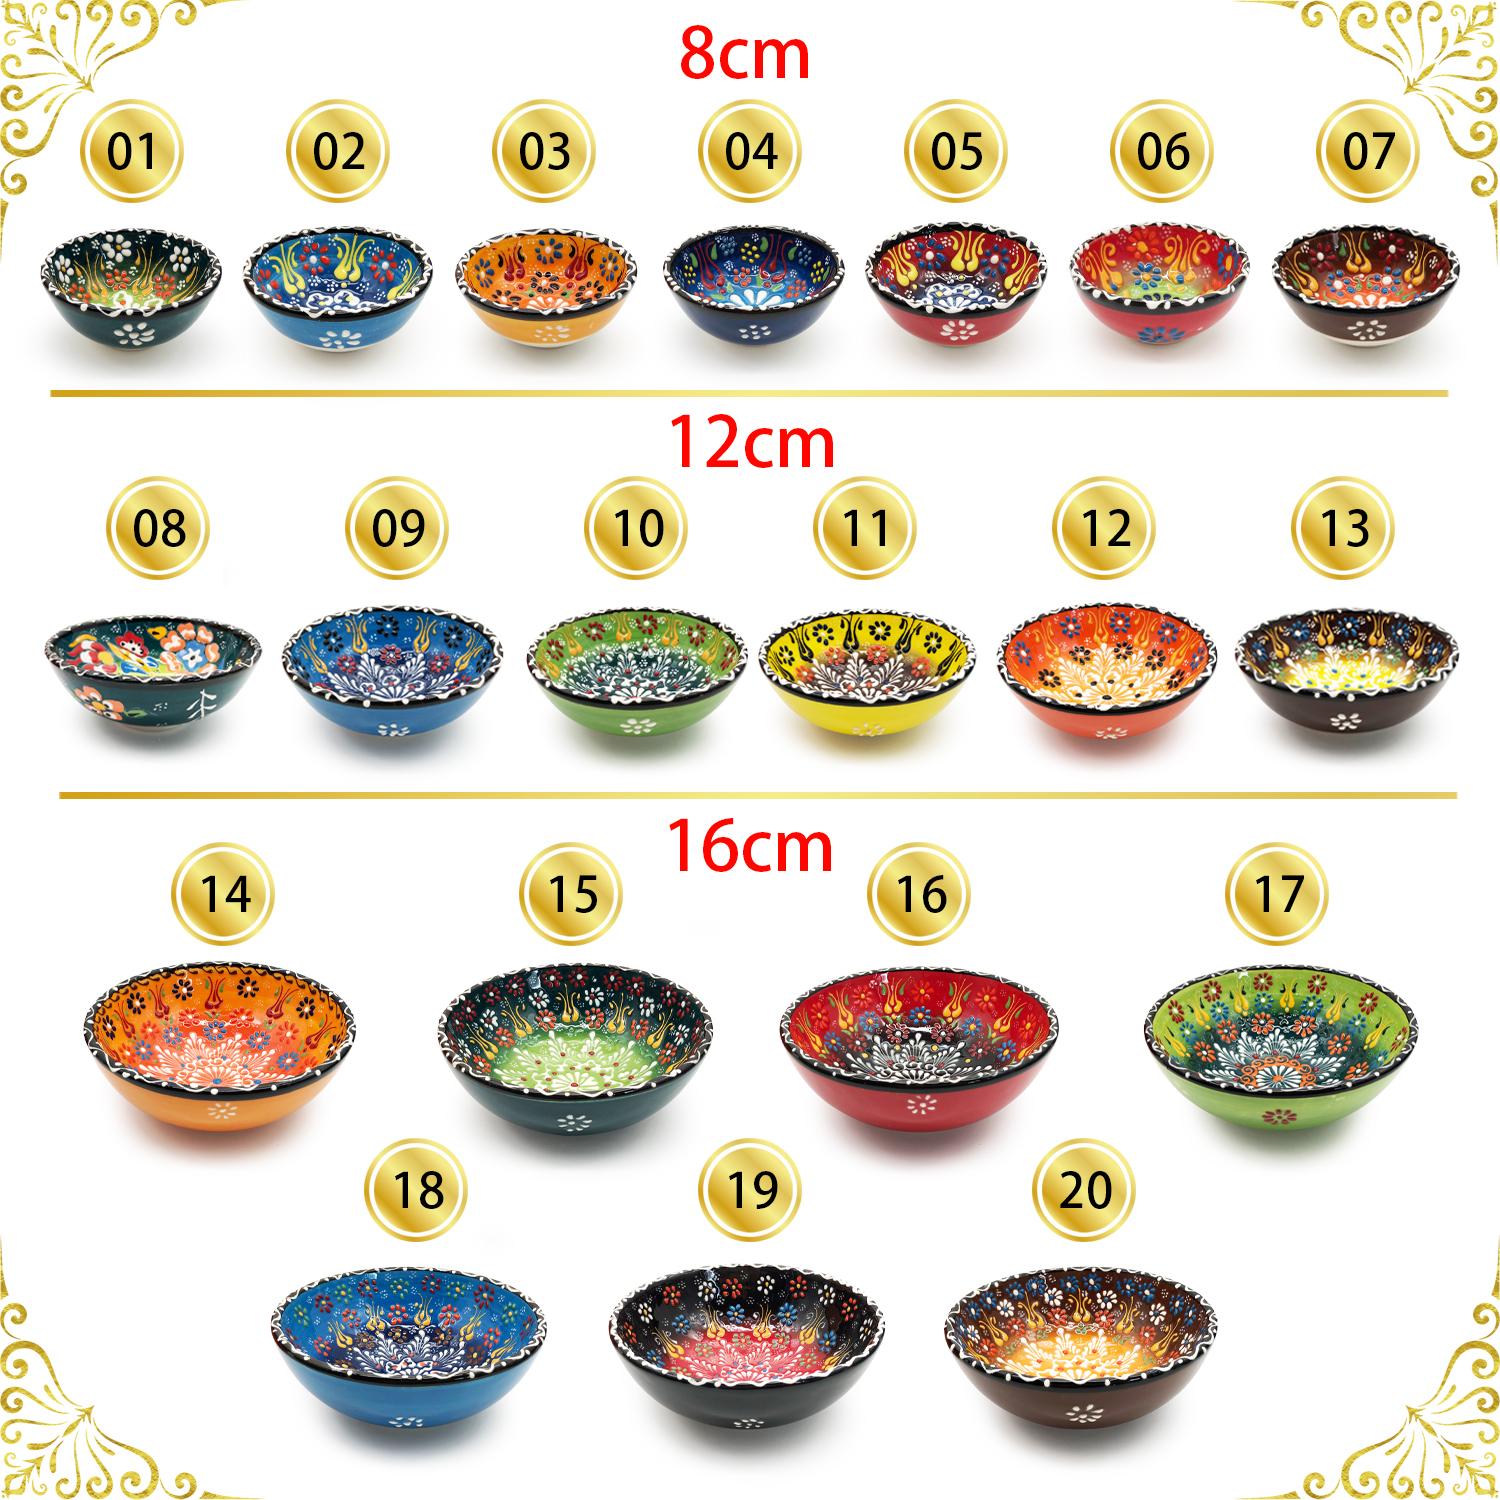 160MM手繪土耳其傳統工藝陶瓷碗， 土耳其餐具奧斯曼帝國浮雕圖案土耳其藝術時尚潮物(VTR-CERAMIC-BOWL-160MM-30202)